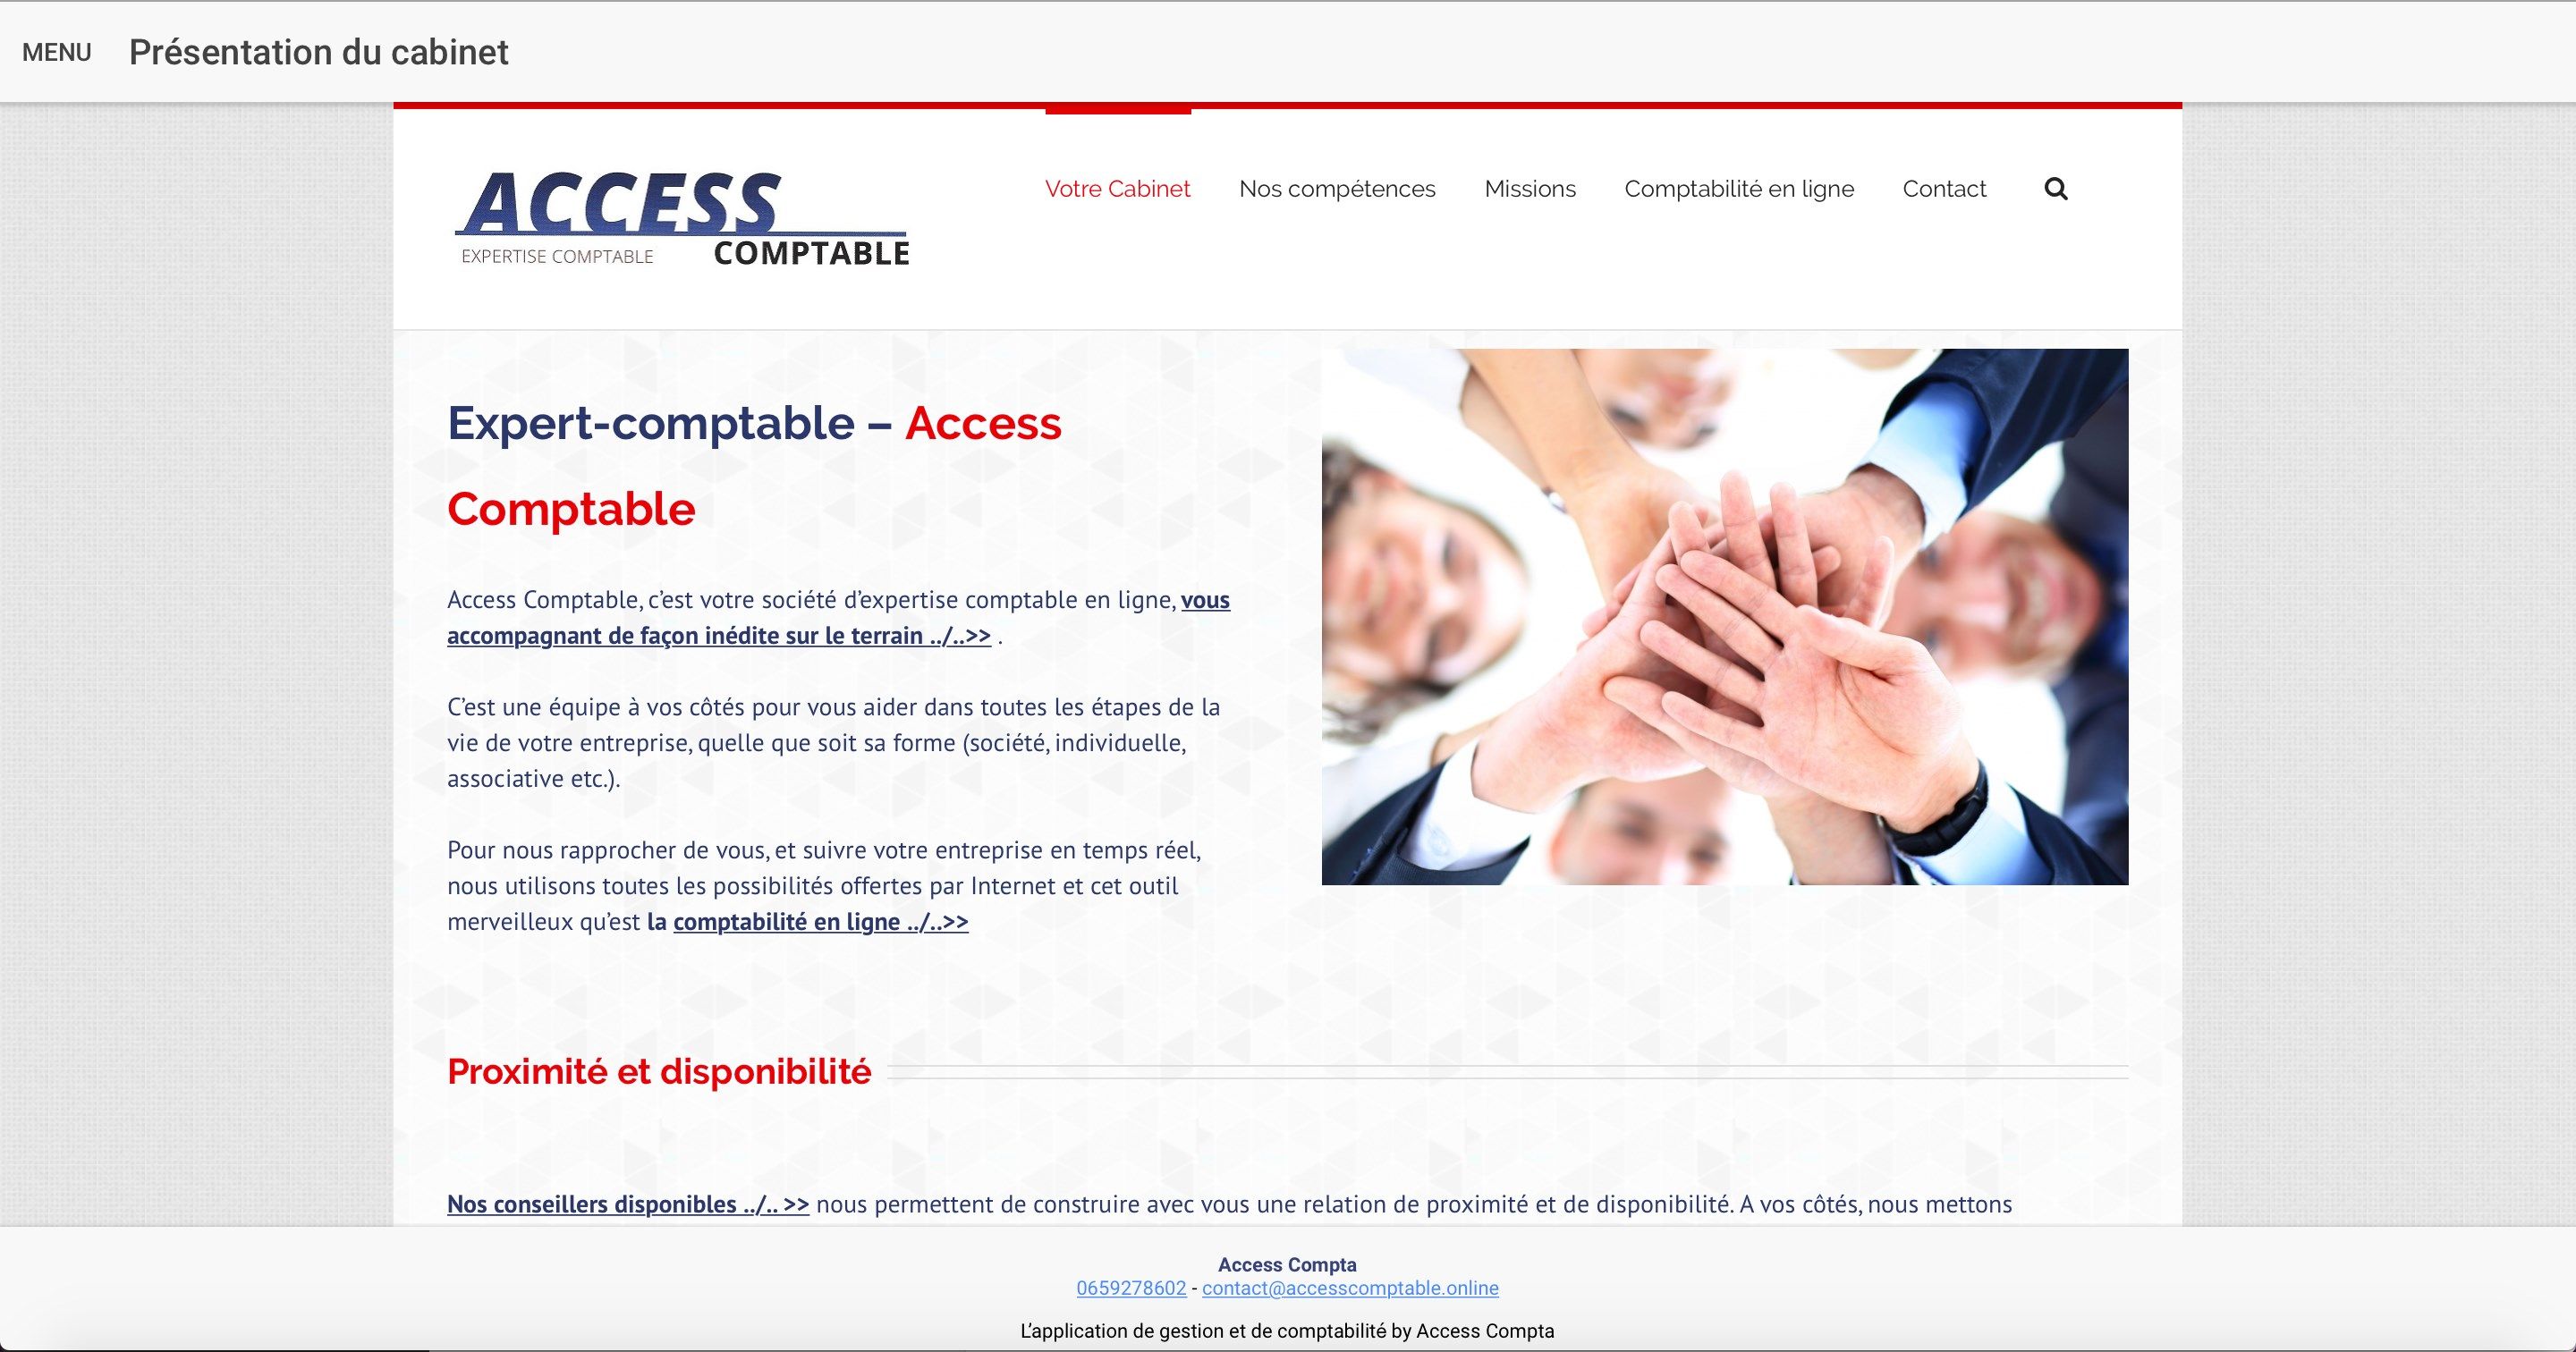 Access Compta